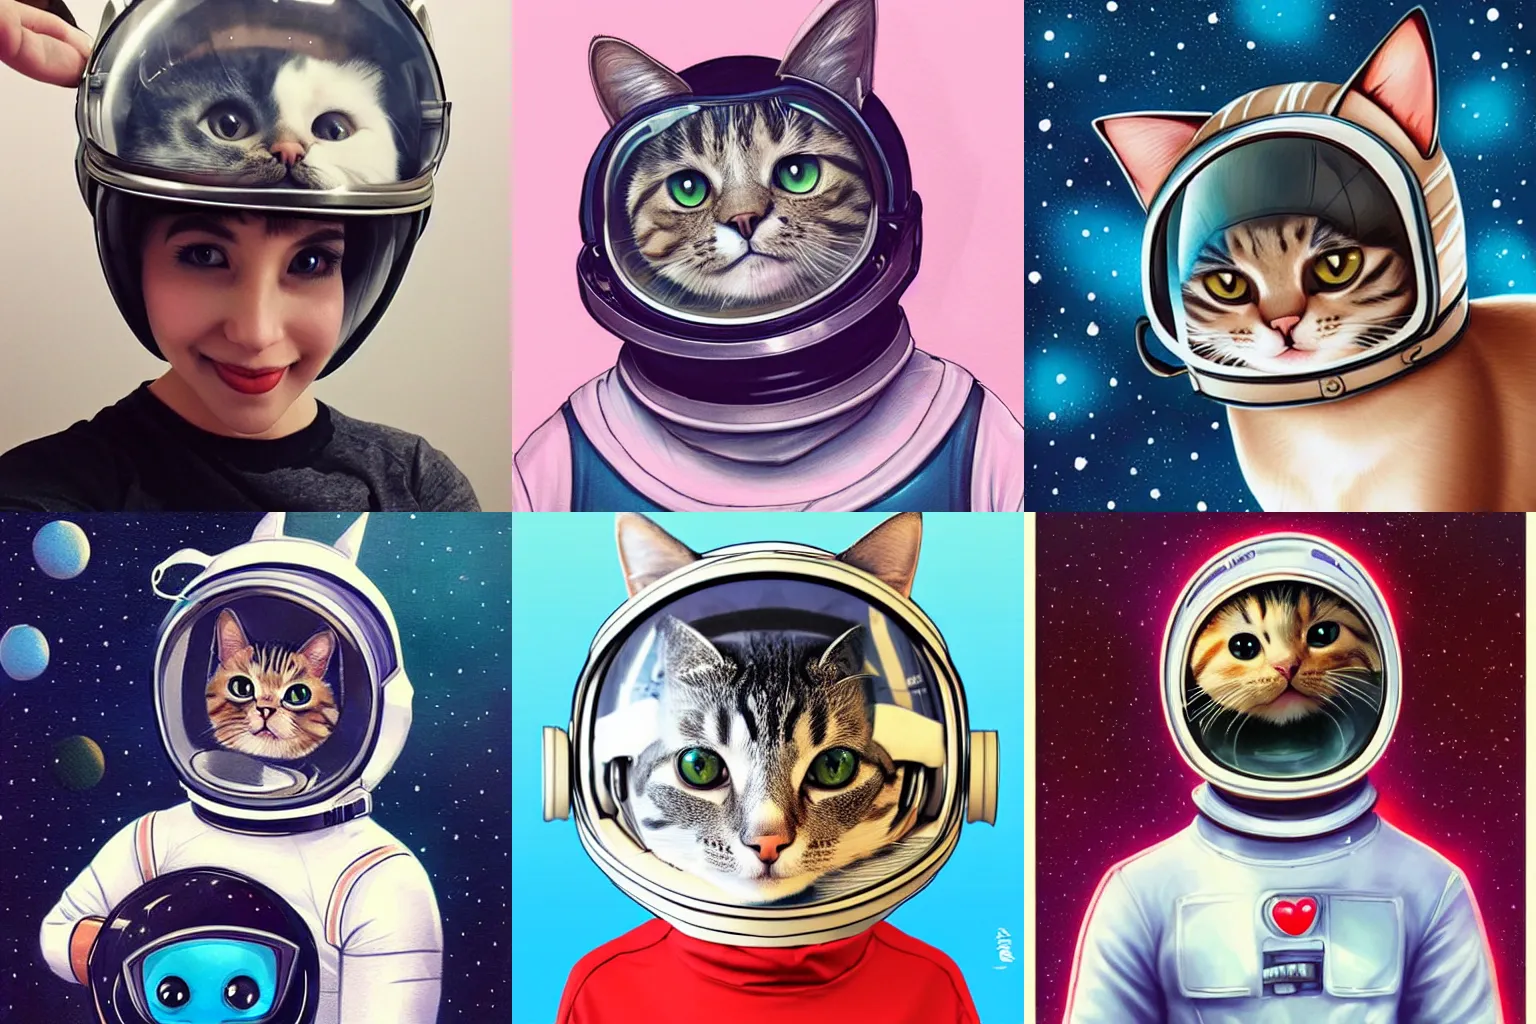 Prompt: a cute cat wearing a space helmet, by Artgerm